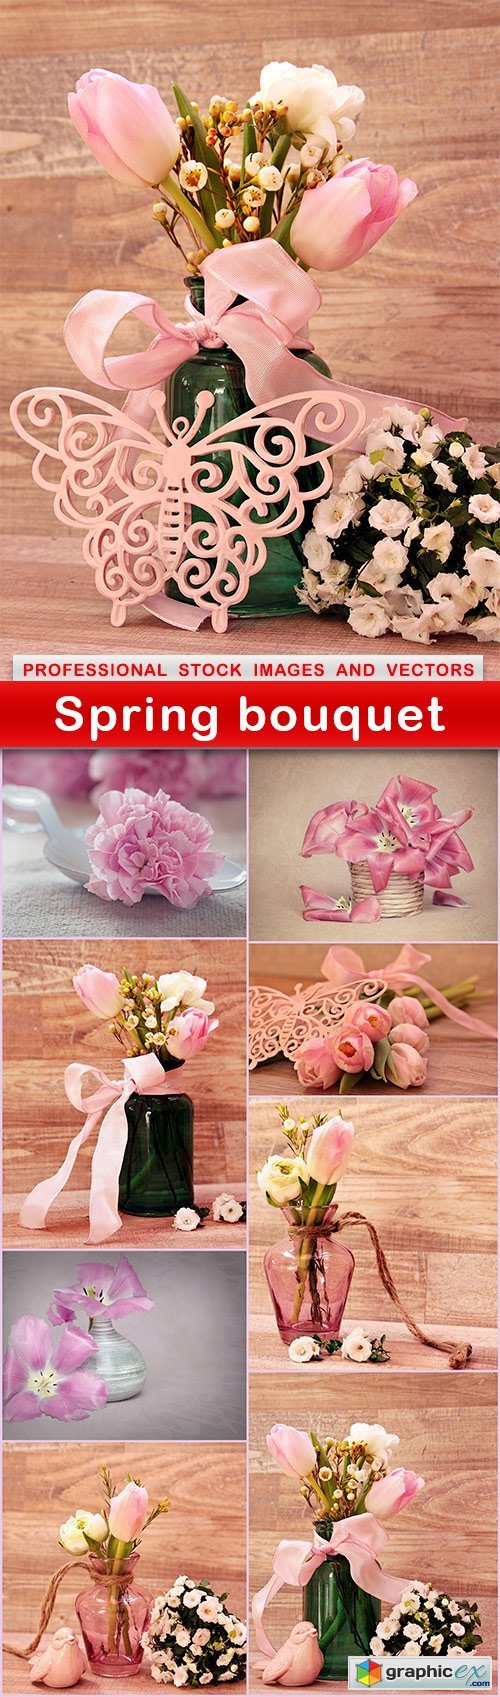 Spring bouquet - 9 UHQ JPEG